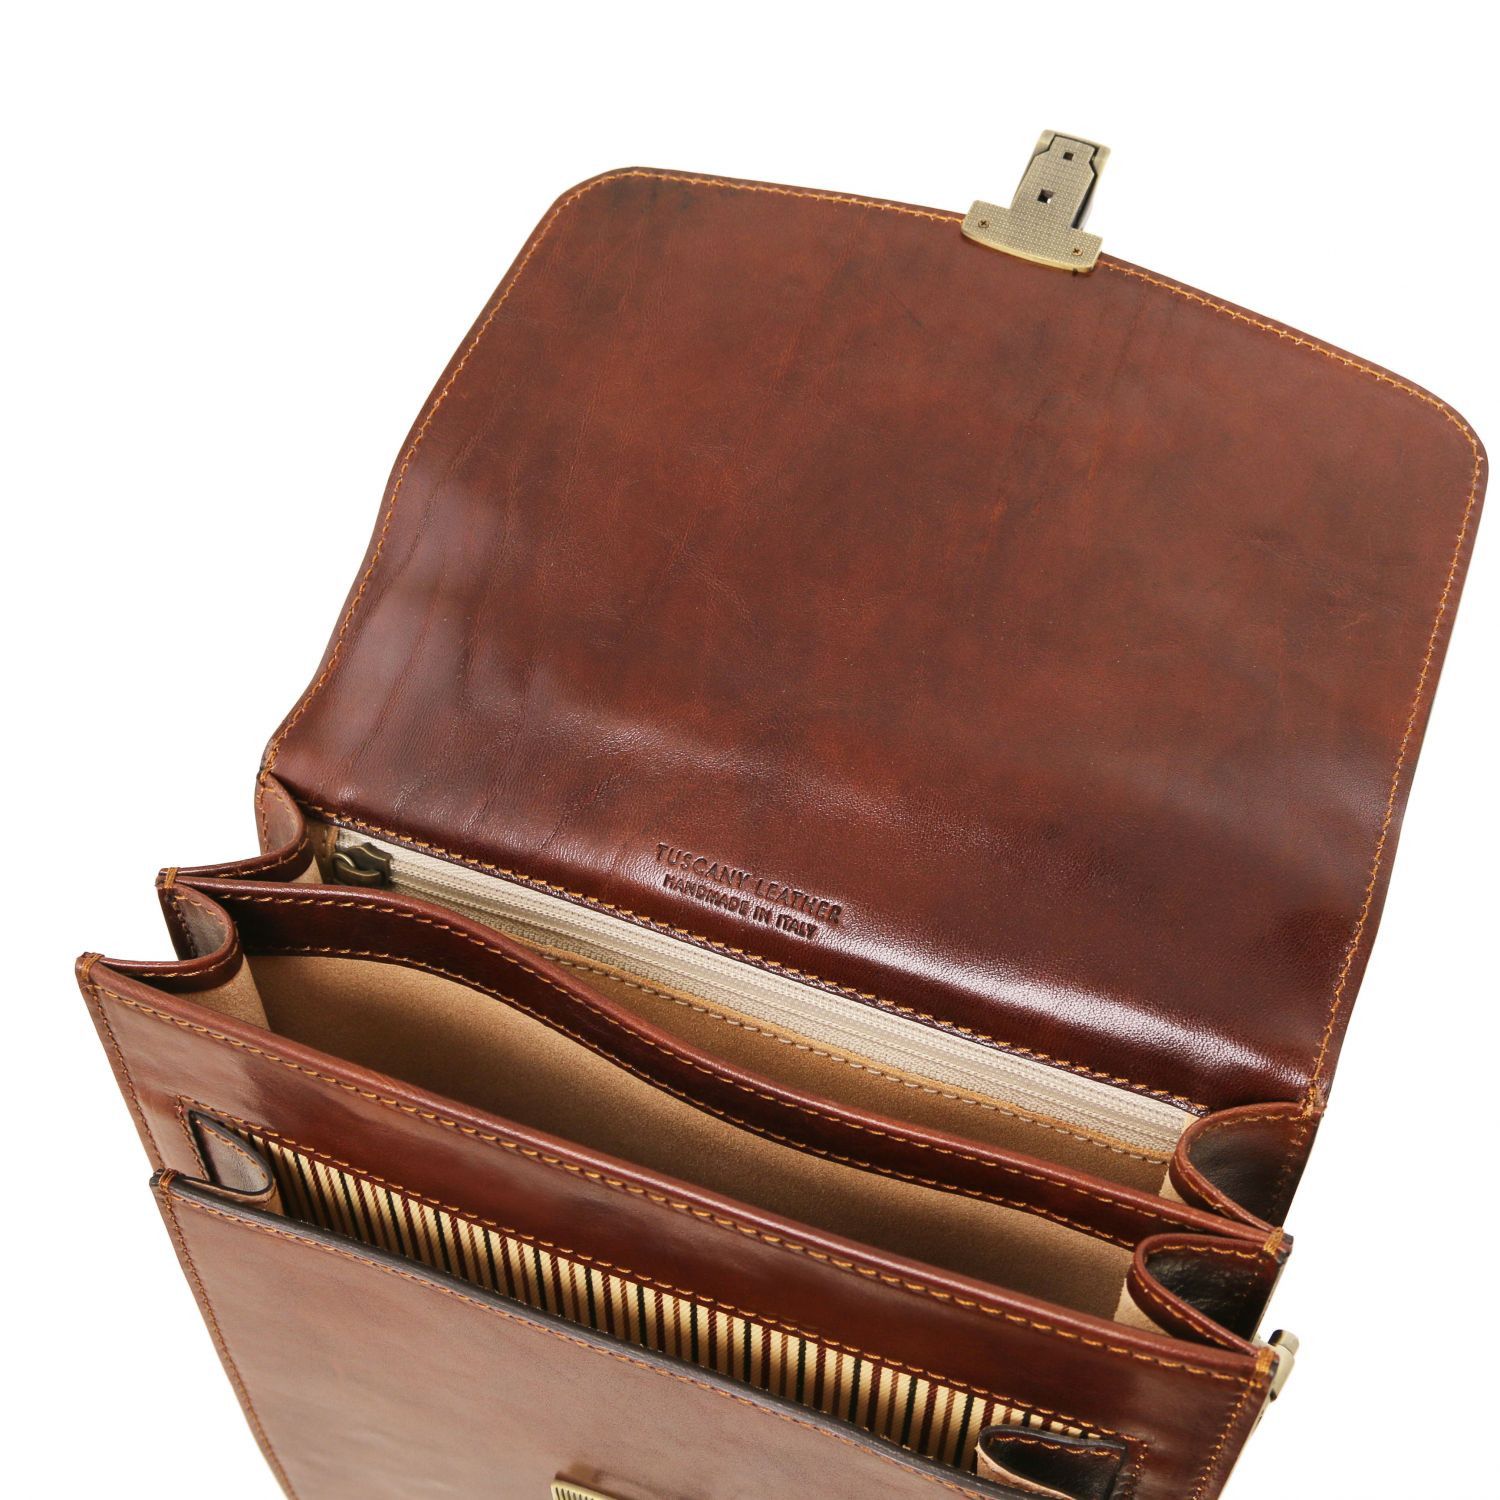 David Leather Crossbody Bag Large Size Brown TL141424